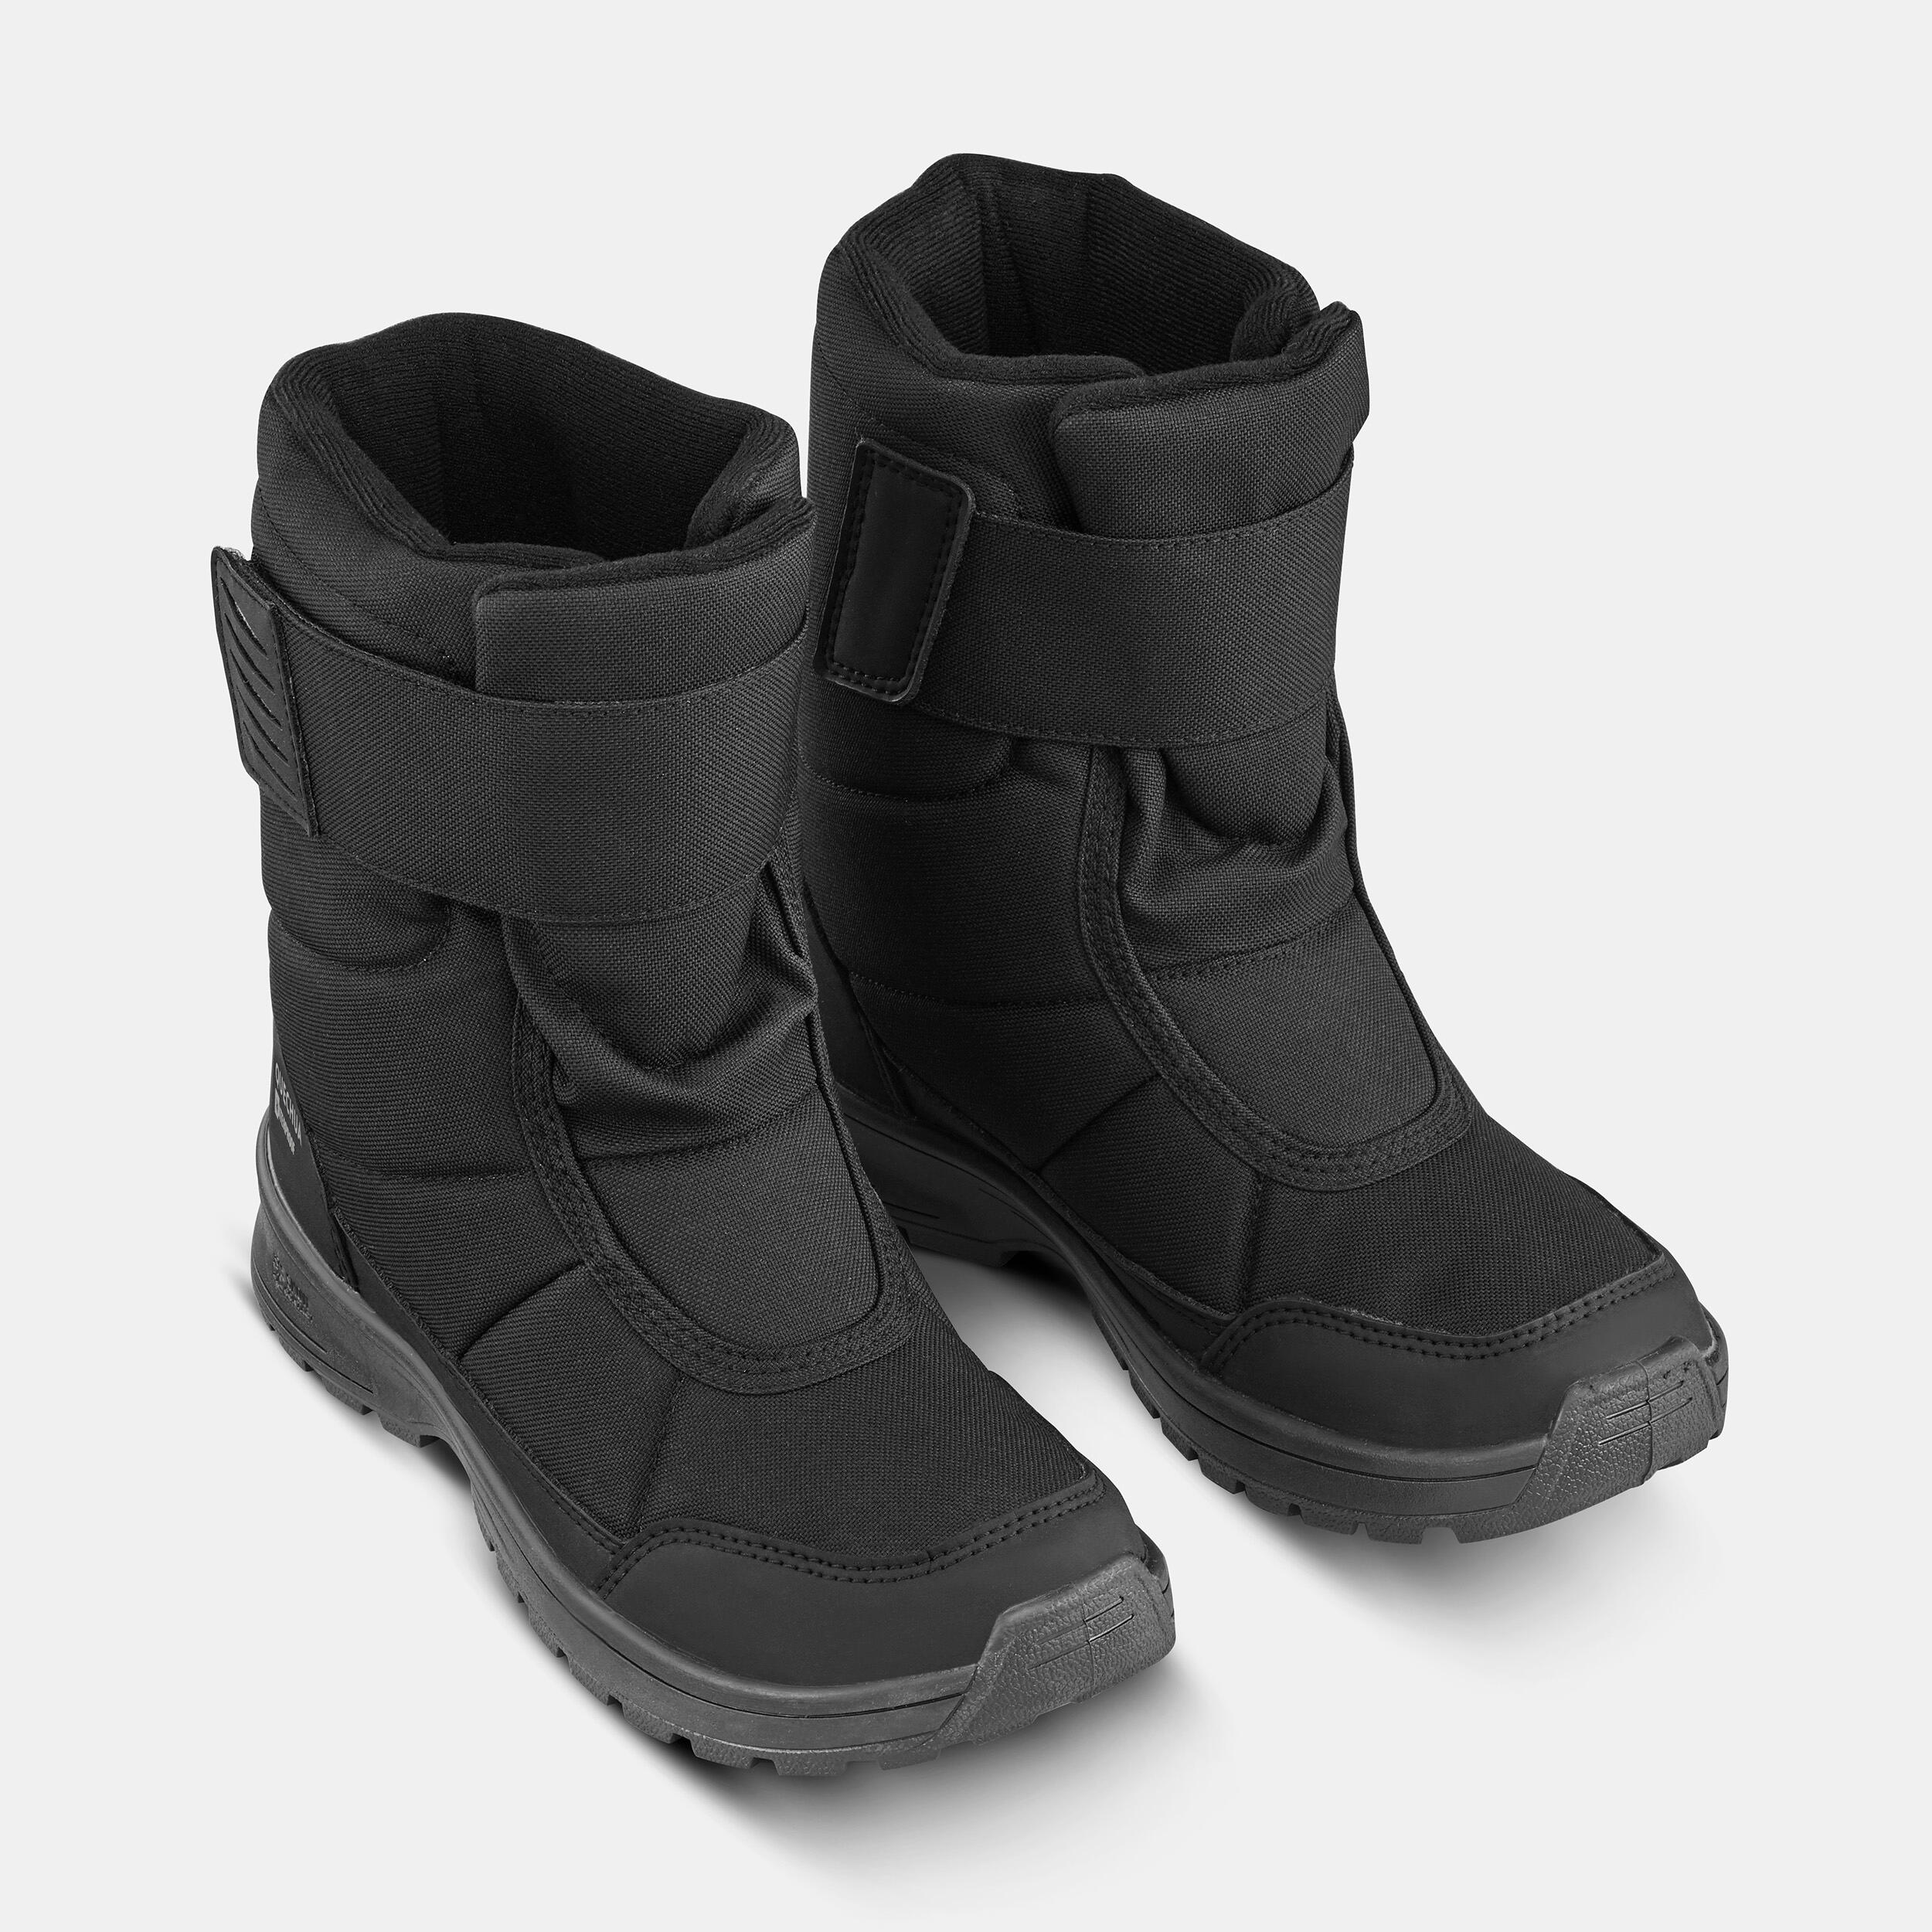 Kids’ warm waterproof snow hiking boots SH100 - Velcro Size 7 - 5.5  2/7